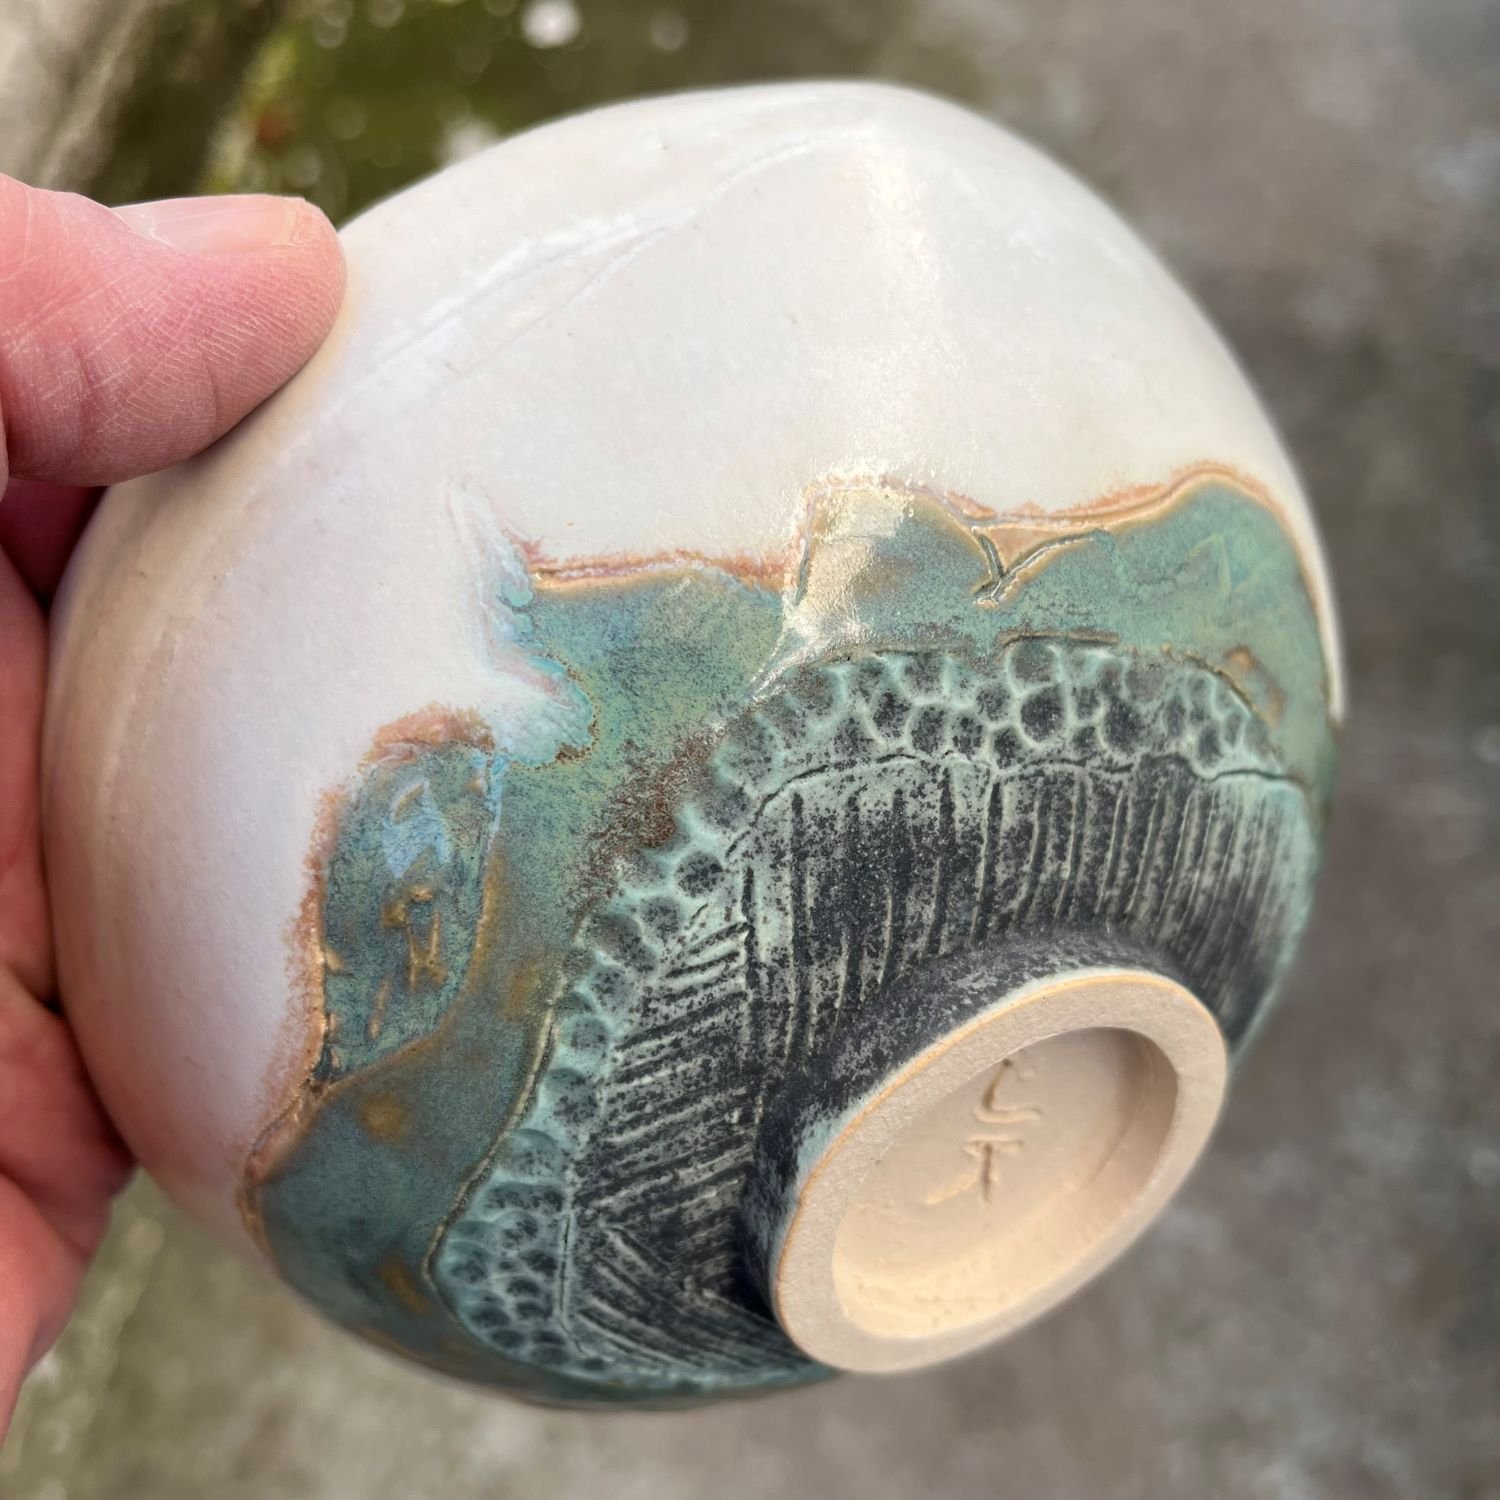 Andrew walker Ceramics pottery class textured bowl.jpg